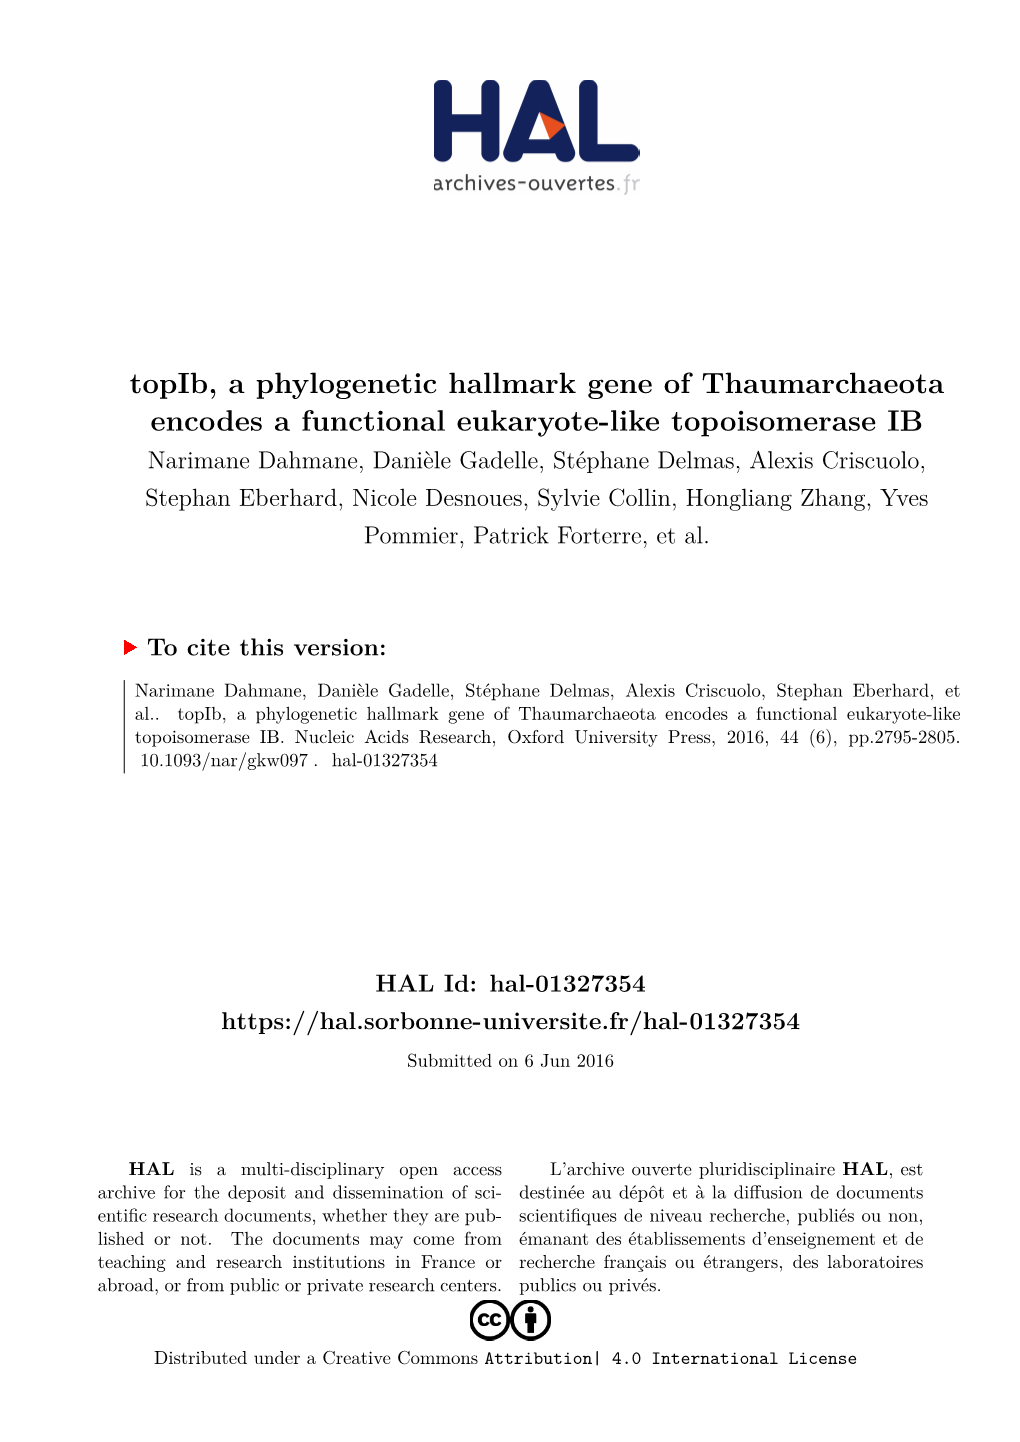 Topib, a Phylogenetic Hallmark Gene of Thaumarchaeota Encodes A